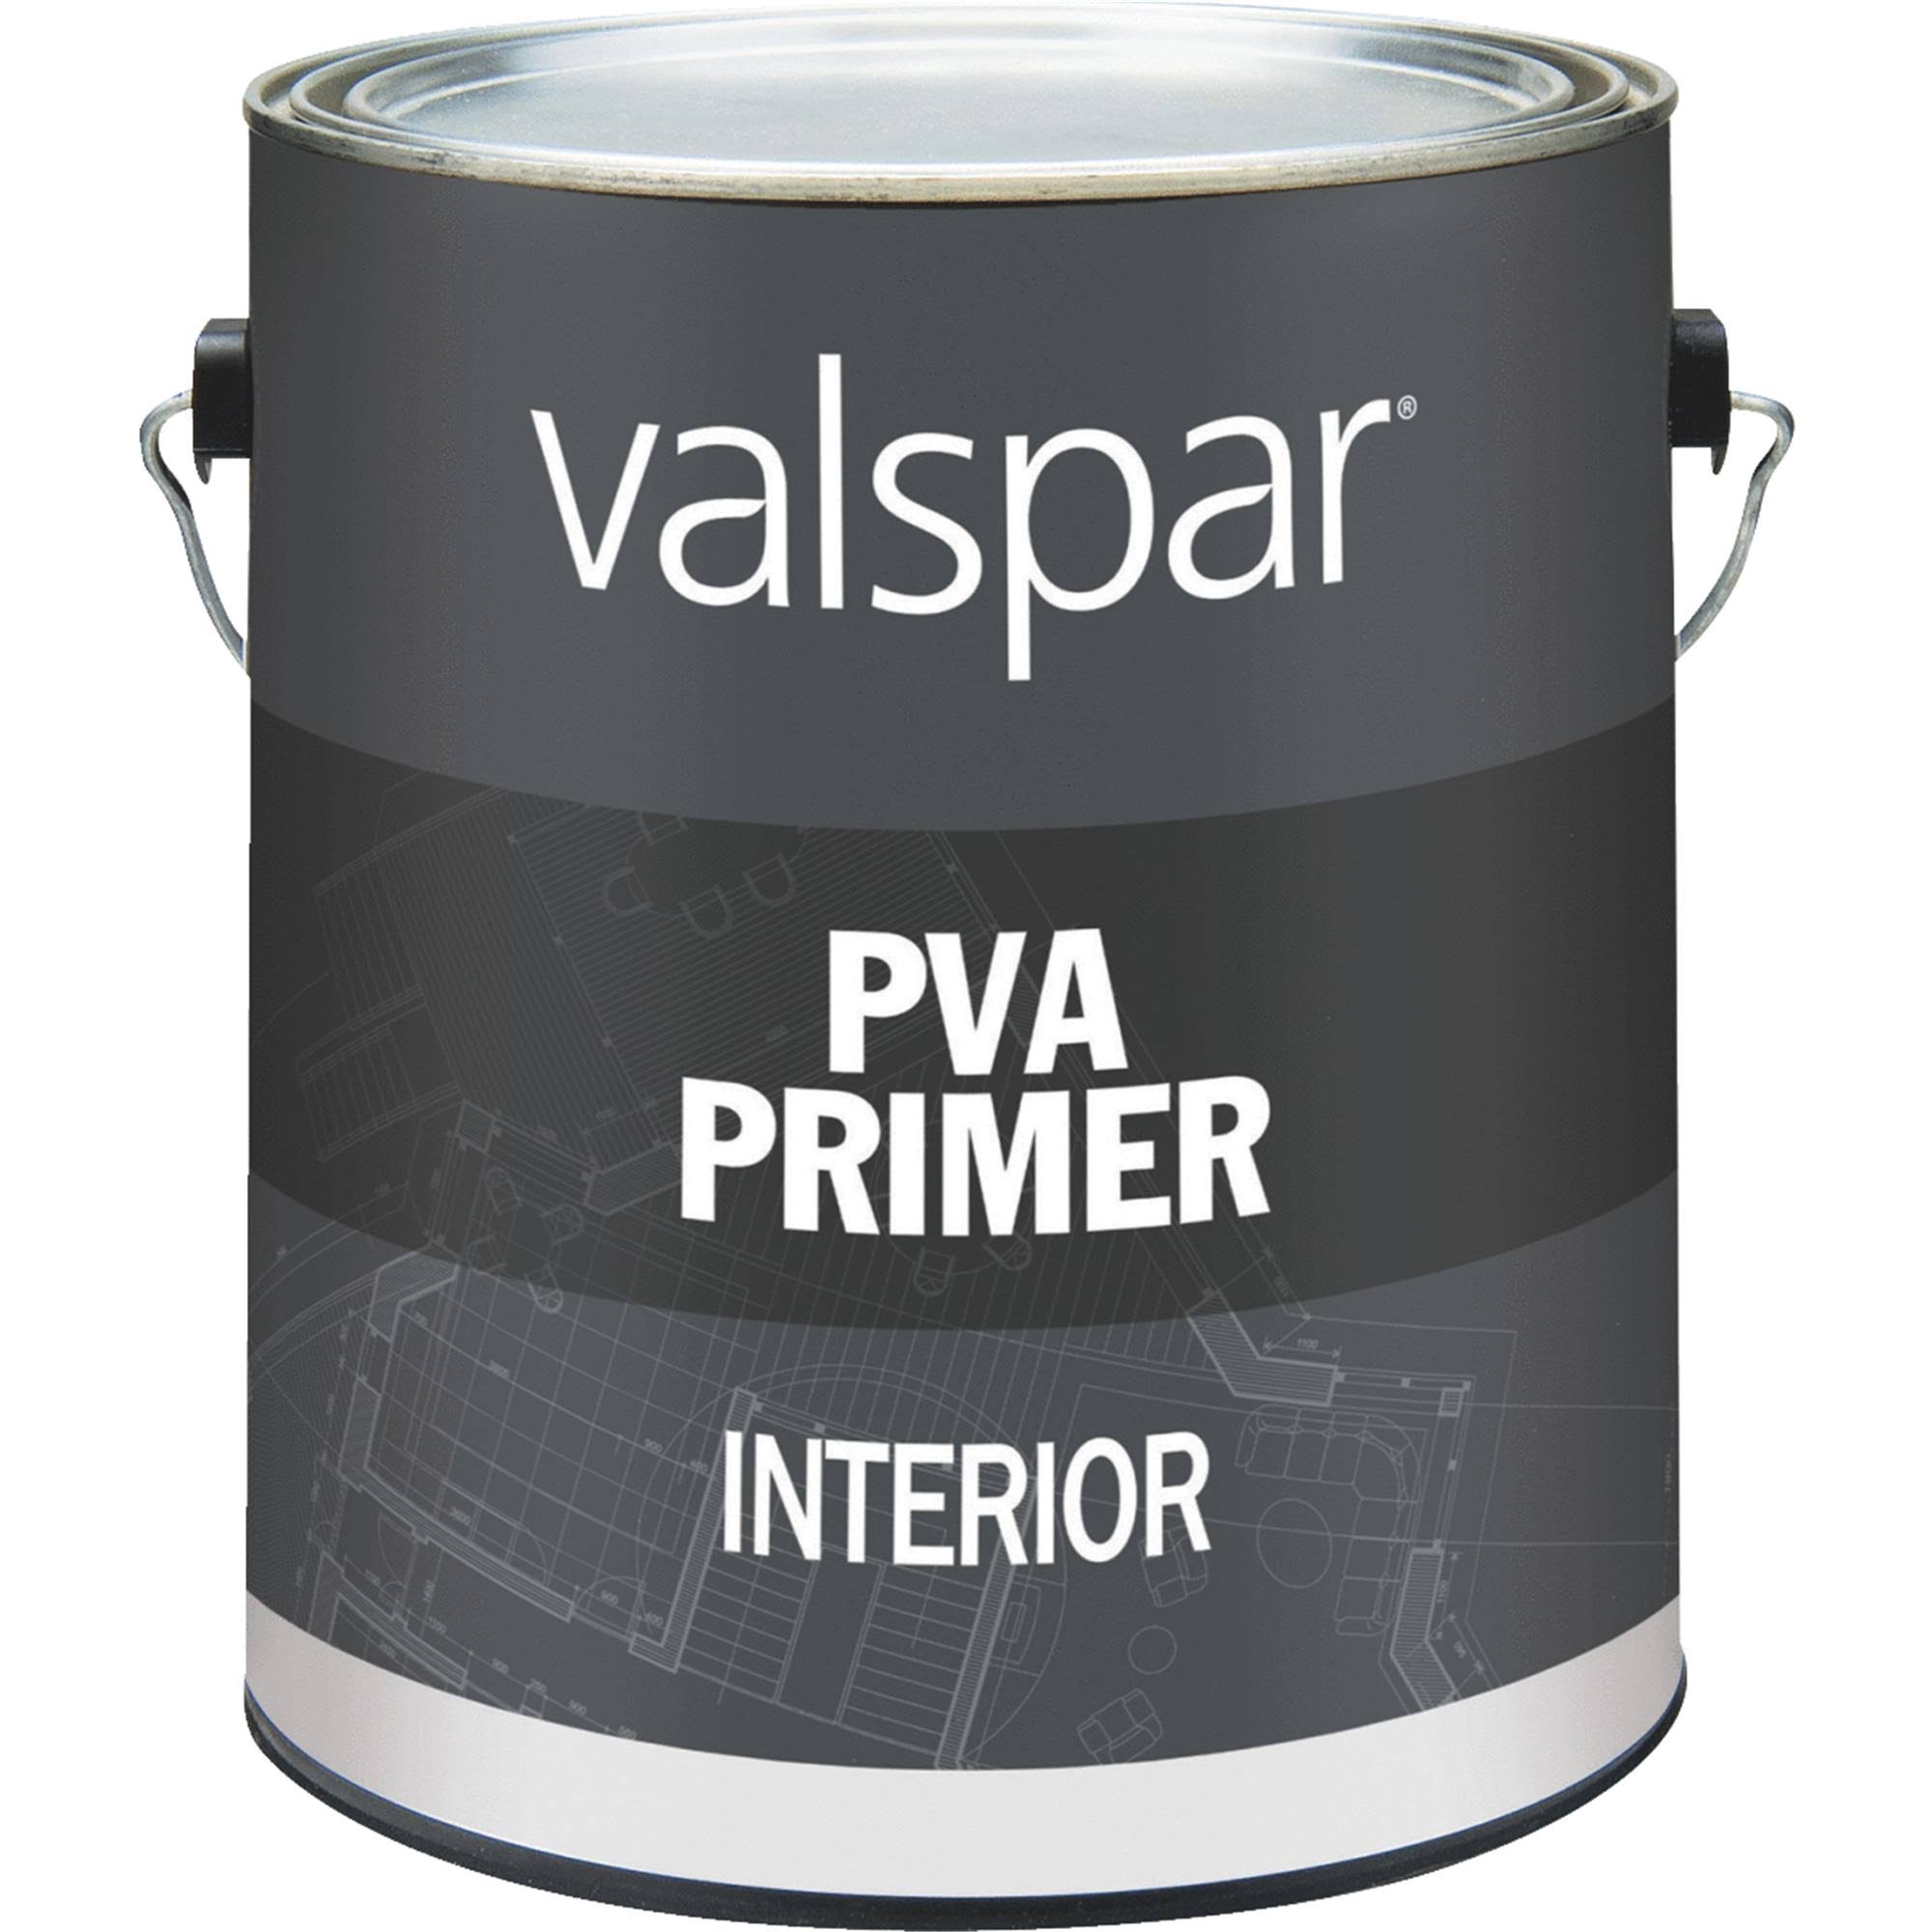 Valspar Professional Interior PVA Primer - 1 Gallon